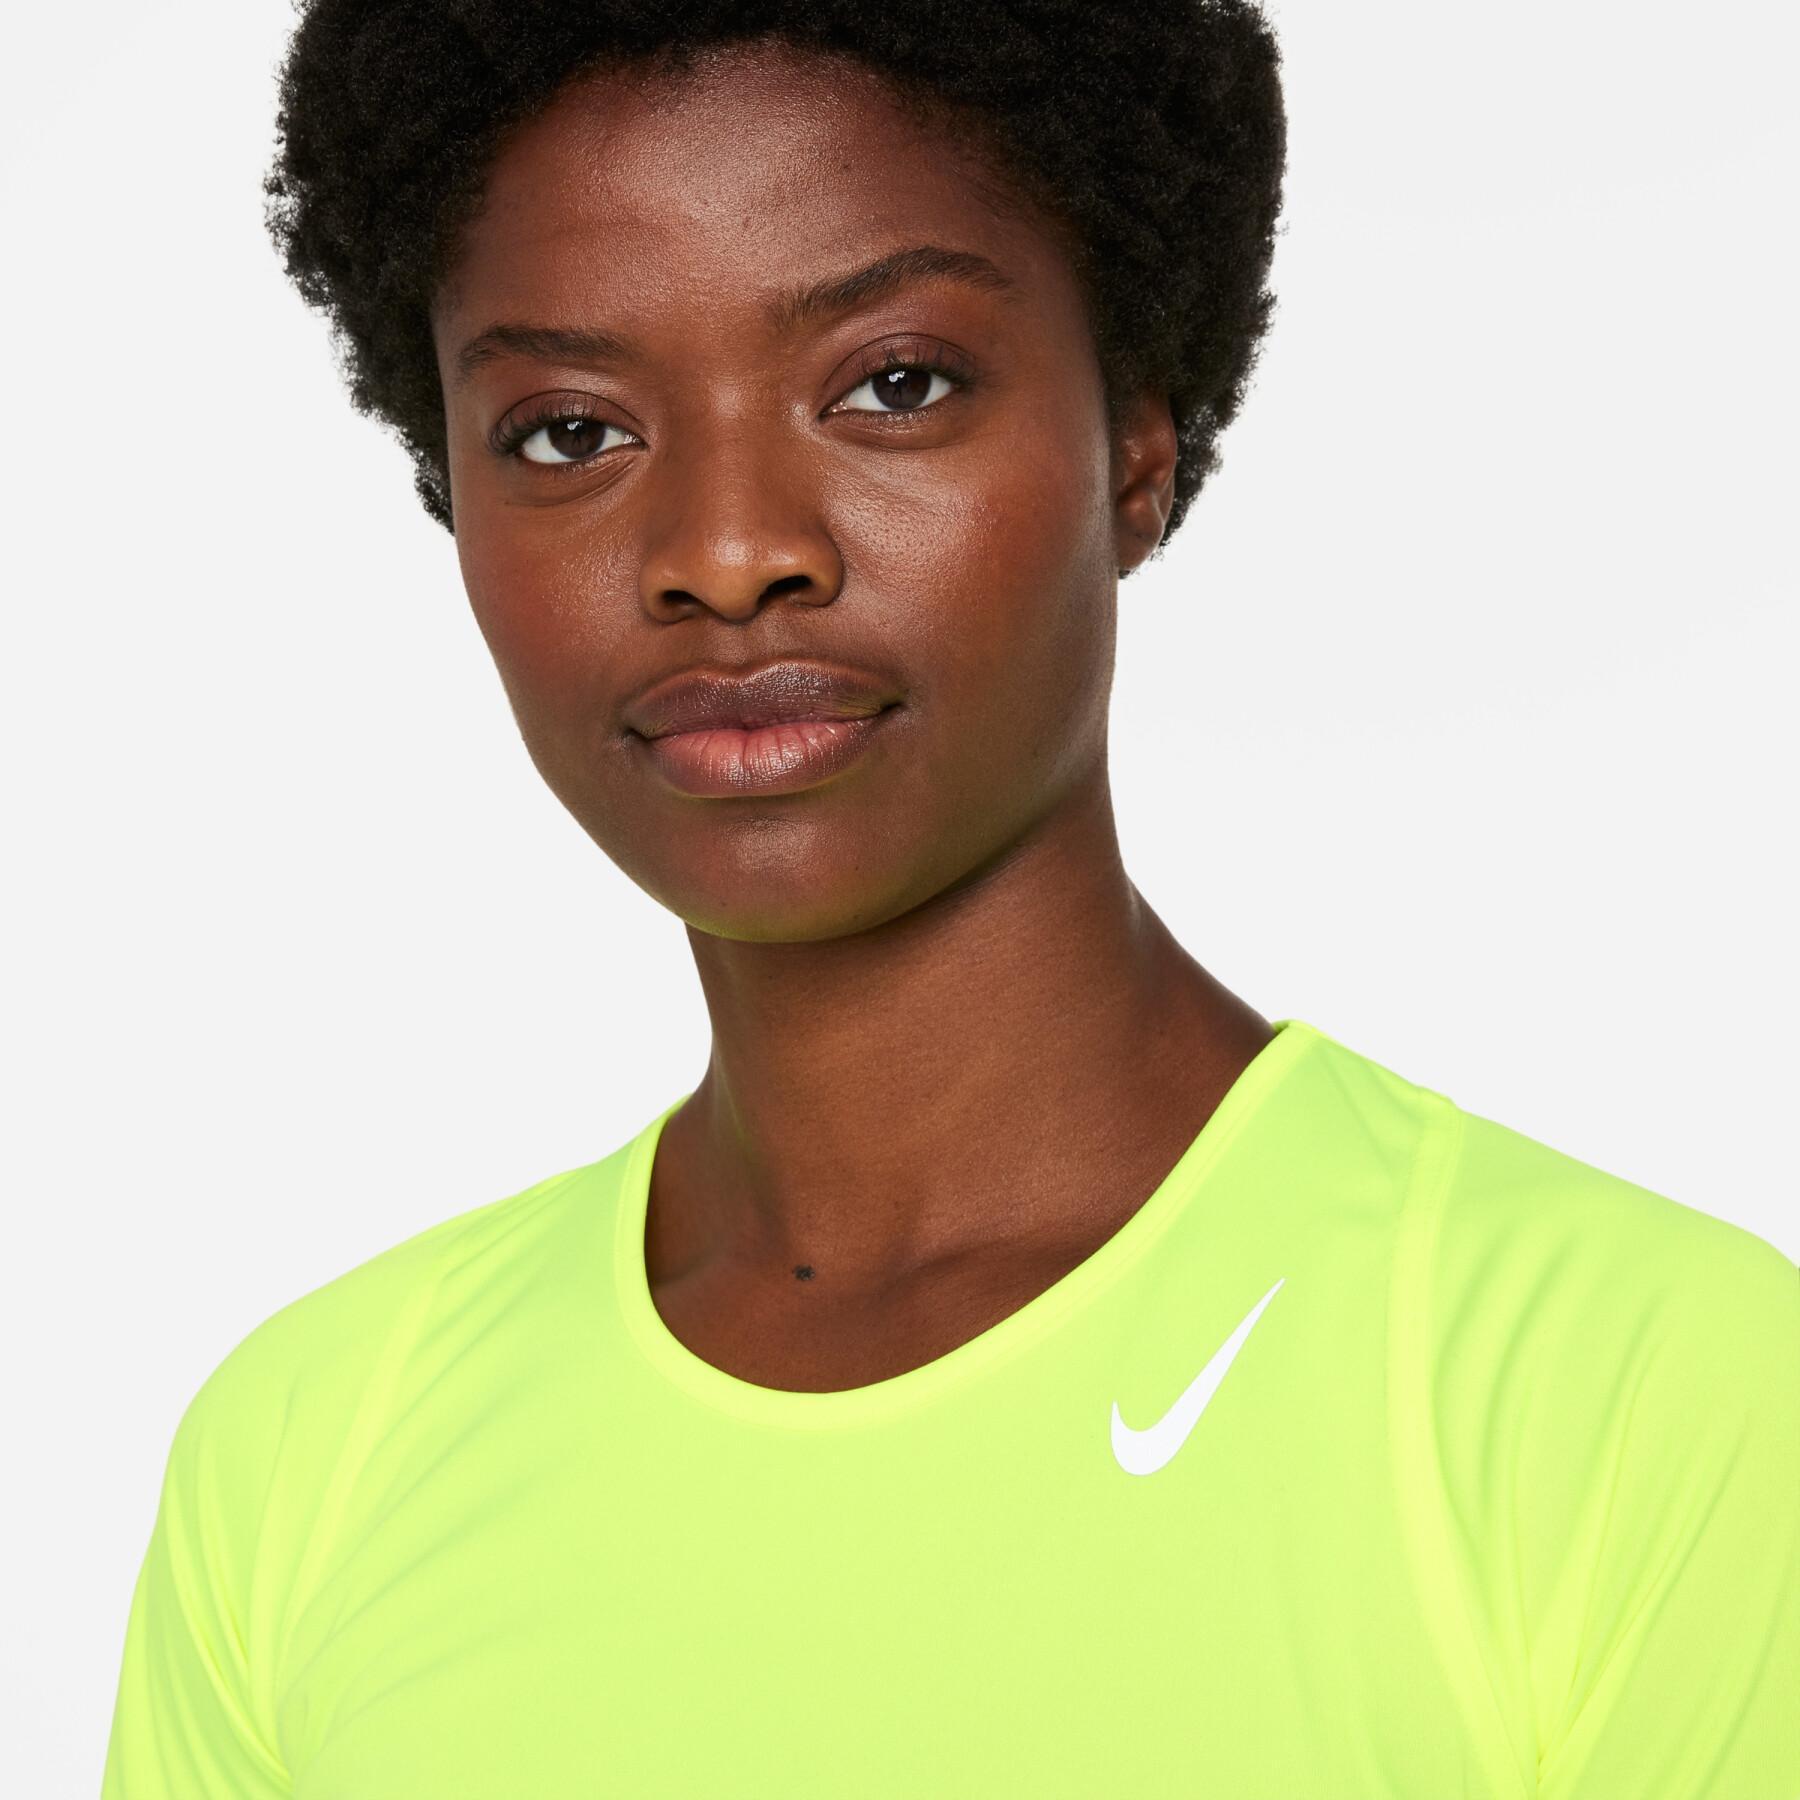 Maglietta da donna Nike dynamic fit race